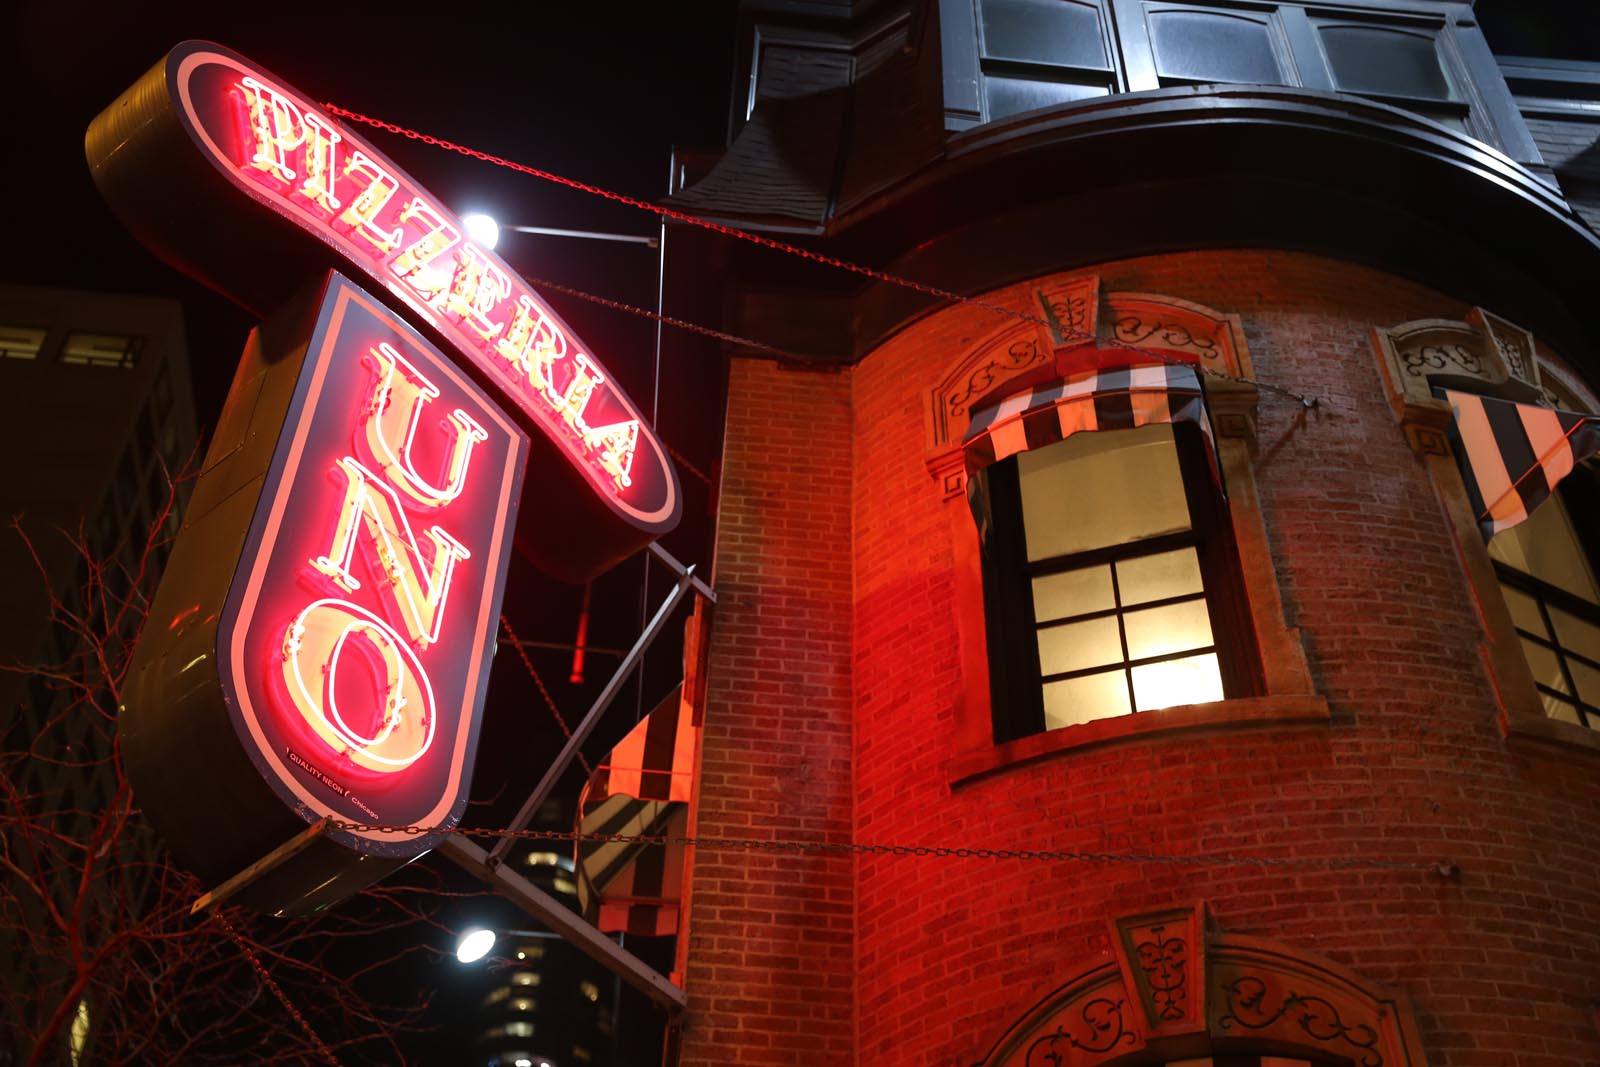 Pizzeria Uno in Chicago neon sign